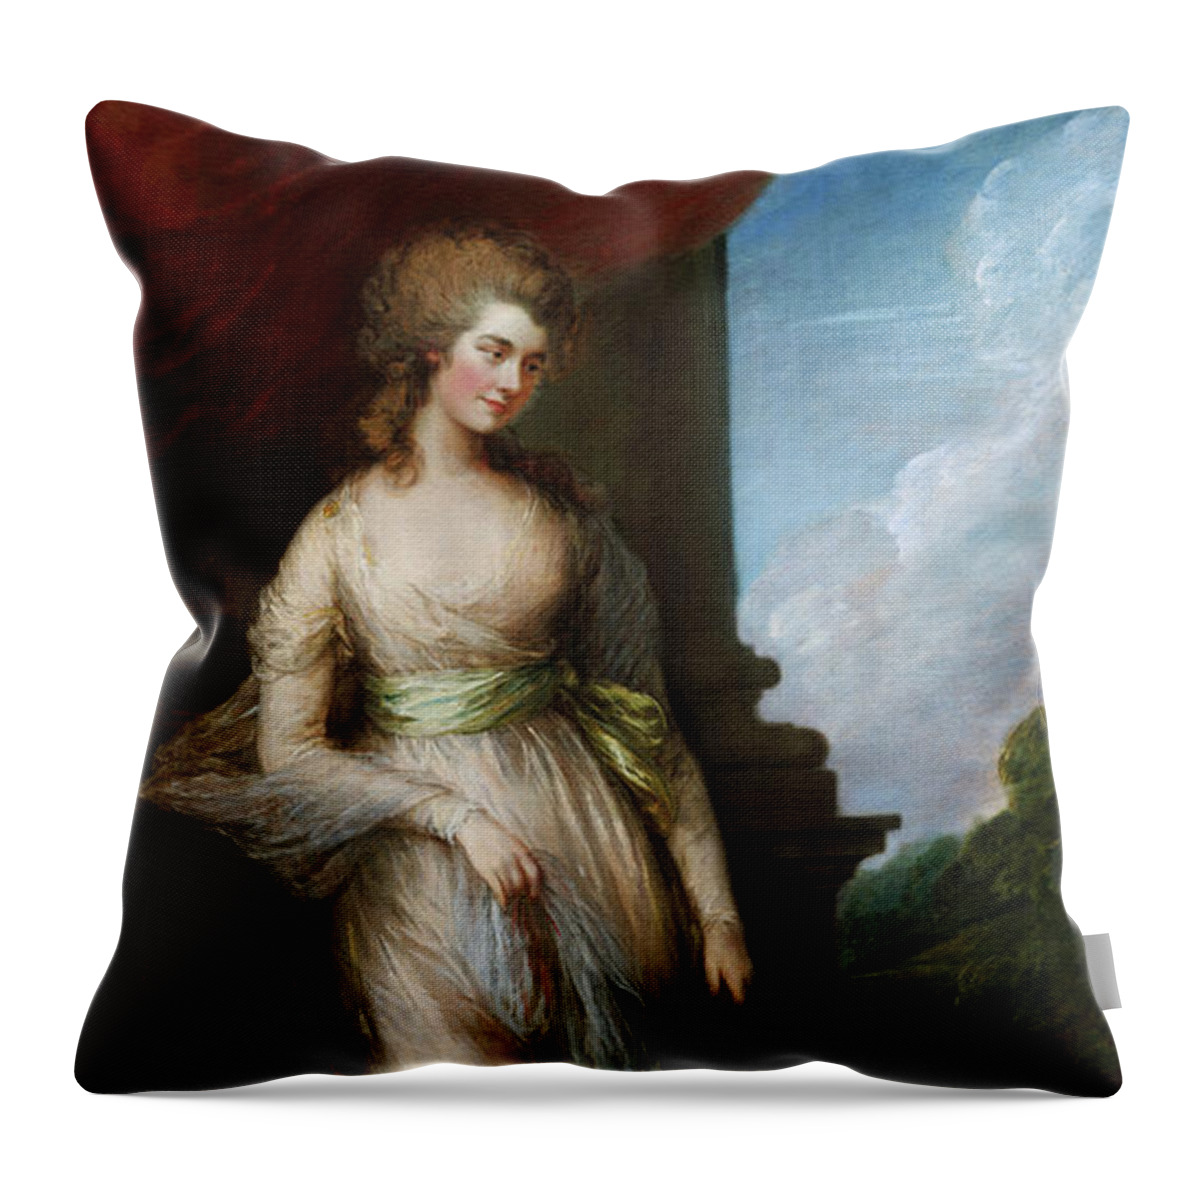 Georgiana Duchess Of Devonshire Throw Pillow featuring the painting Georgiana Duchess of Devonshire by Thomas Gainsborough by Rolando Burbon